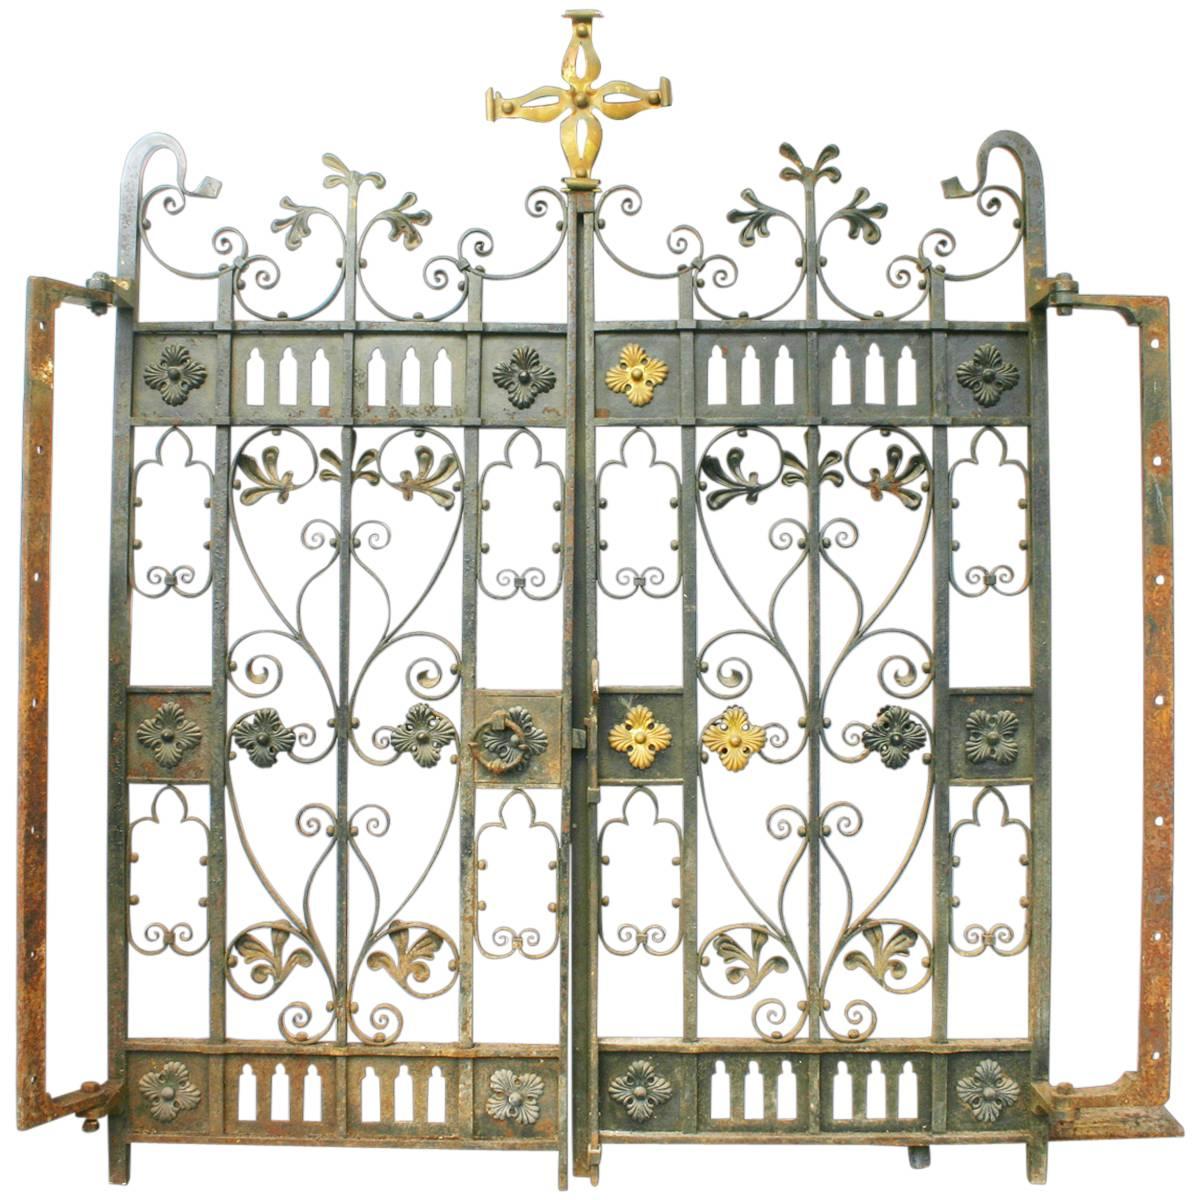 Decorative Antique 19th Century Wrought Iron Gates